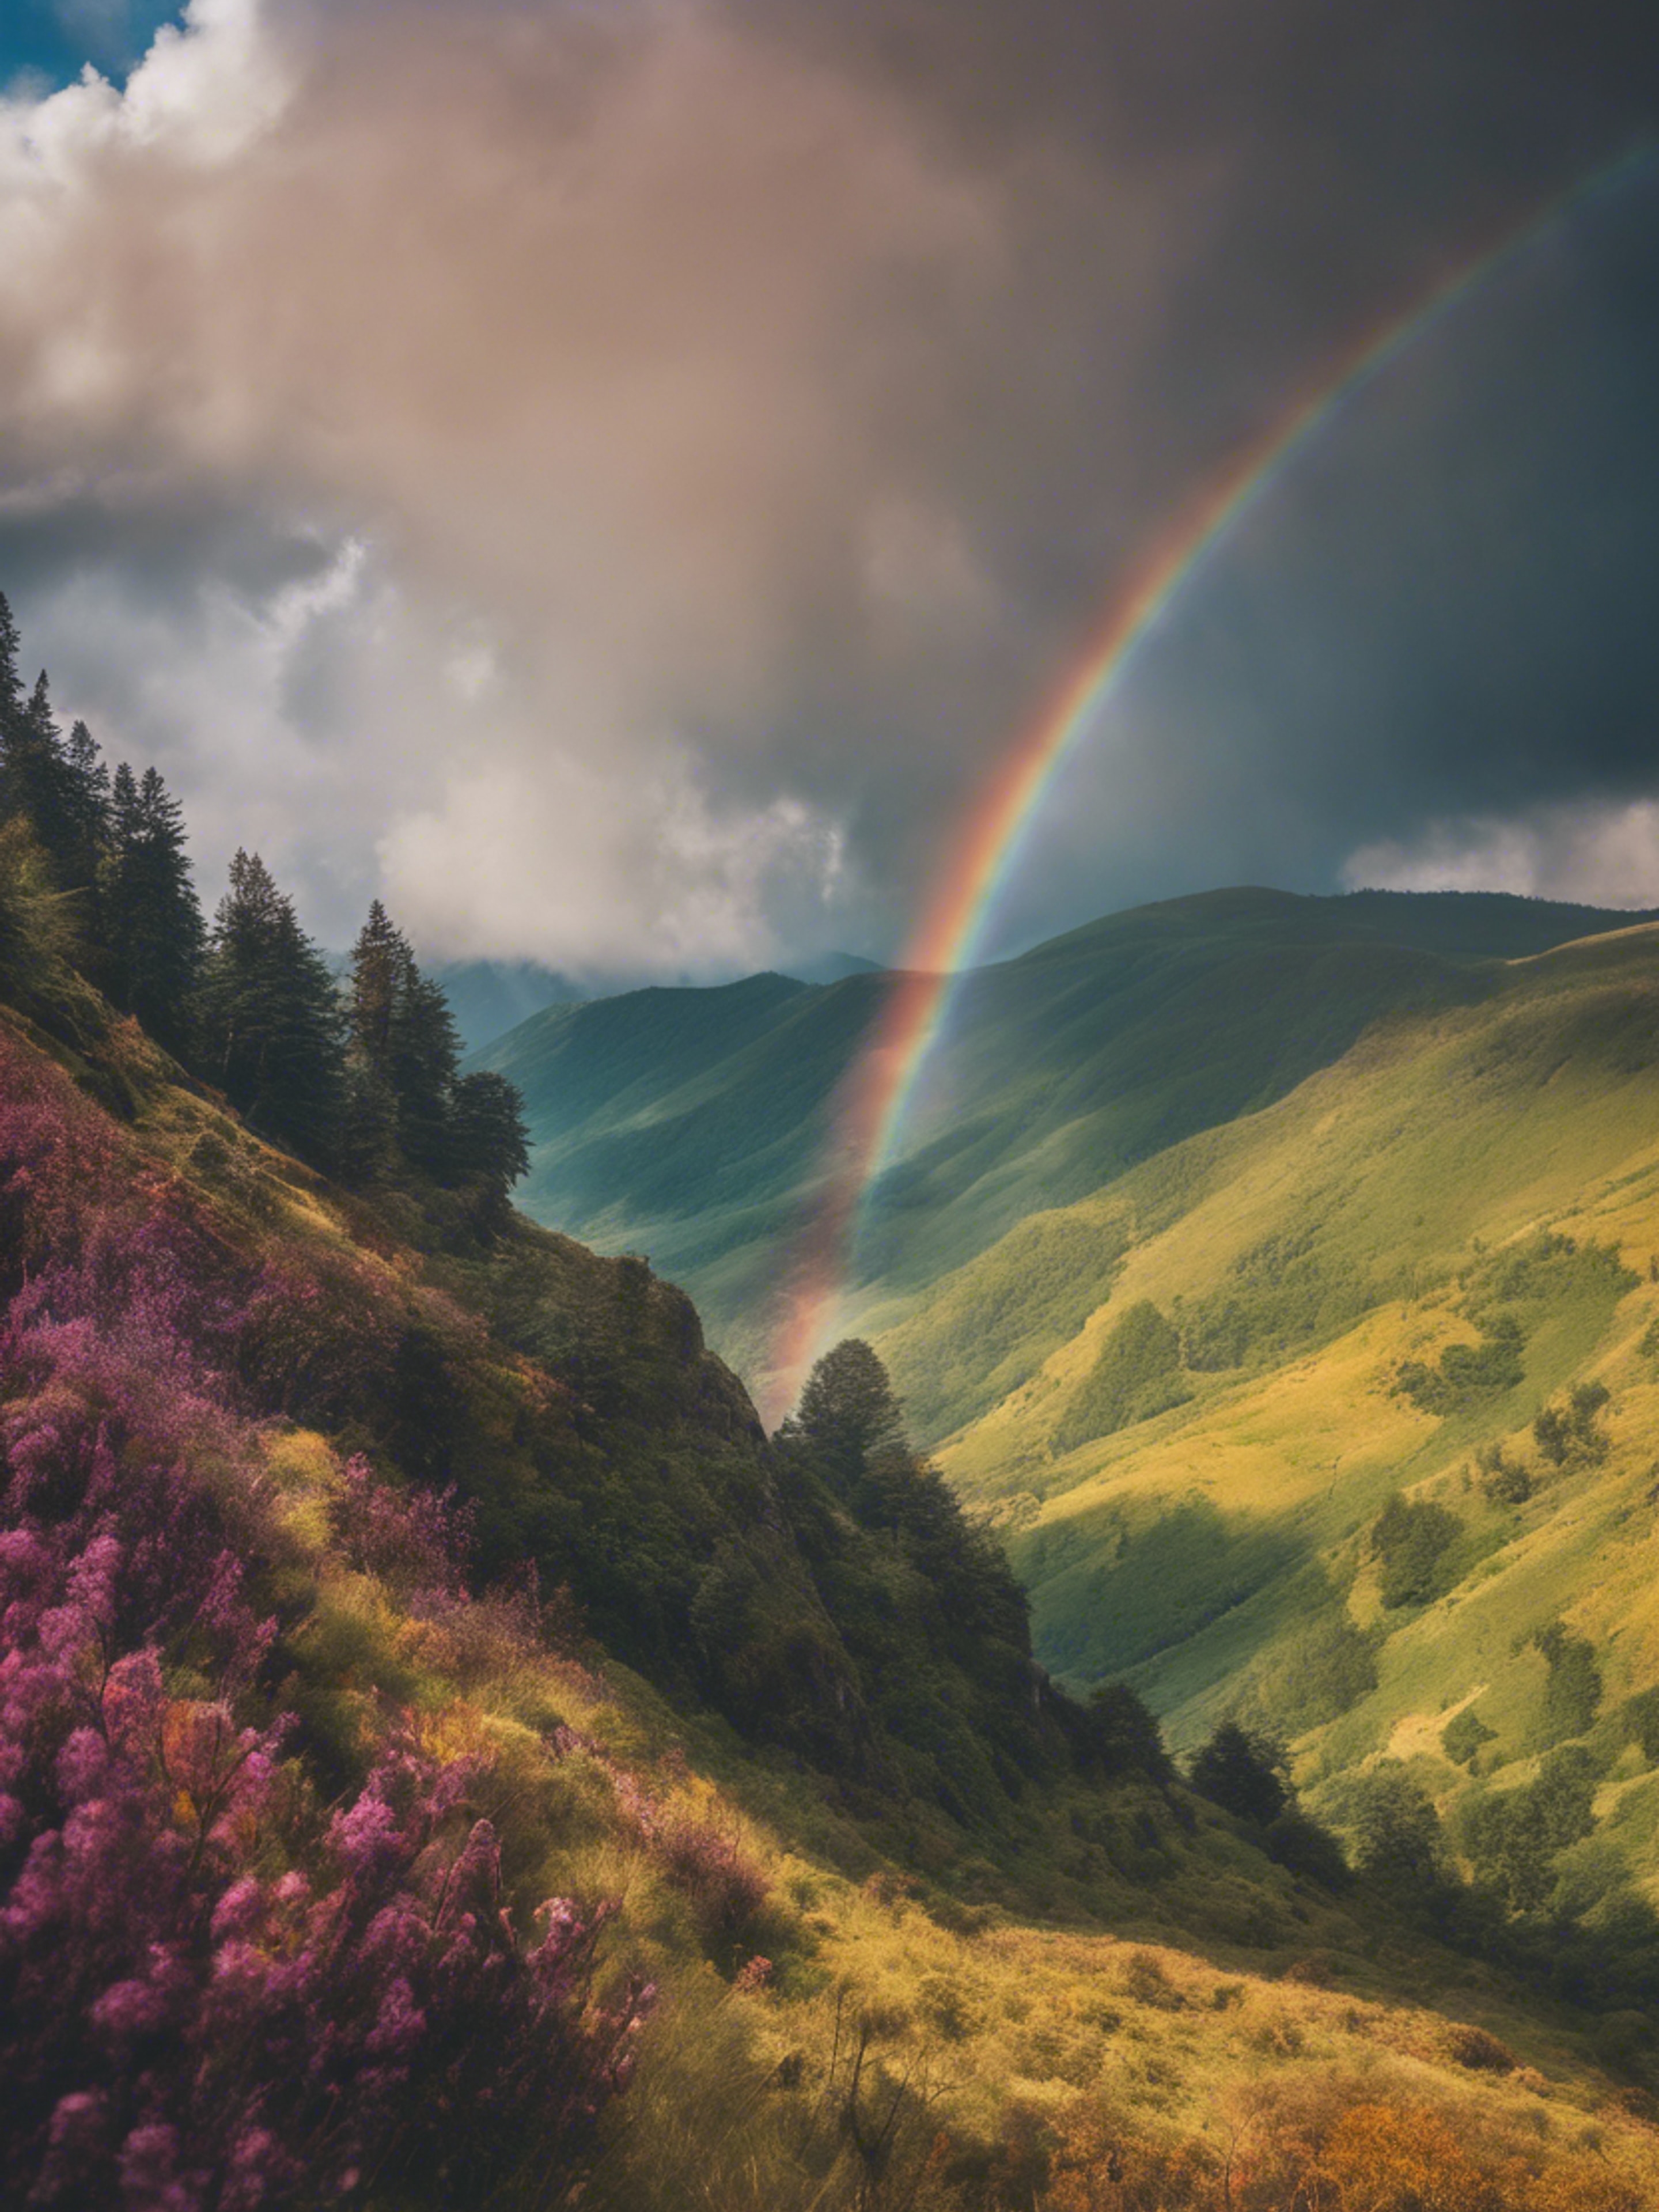 A majestic boho rainbow seen from a mountainous landscape. Wallpaper[3c1707e1fd3c4ff0a146]